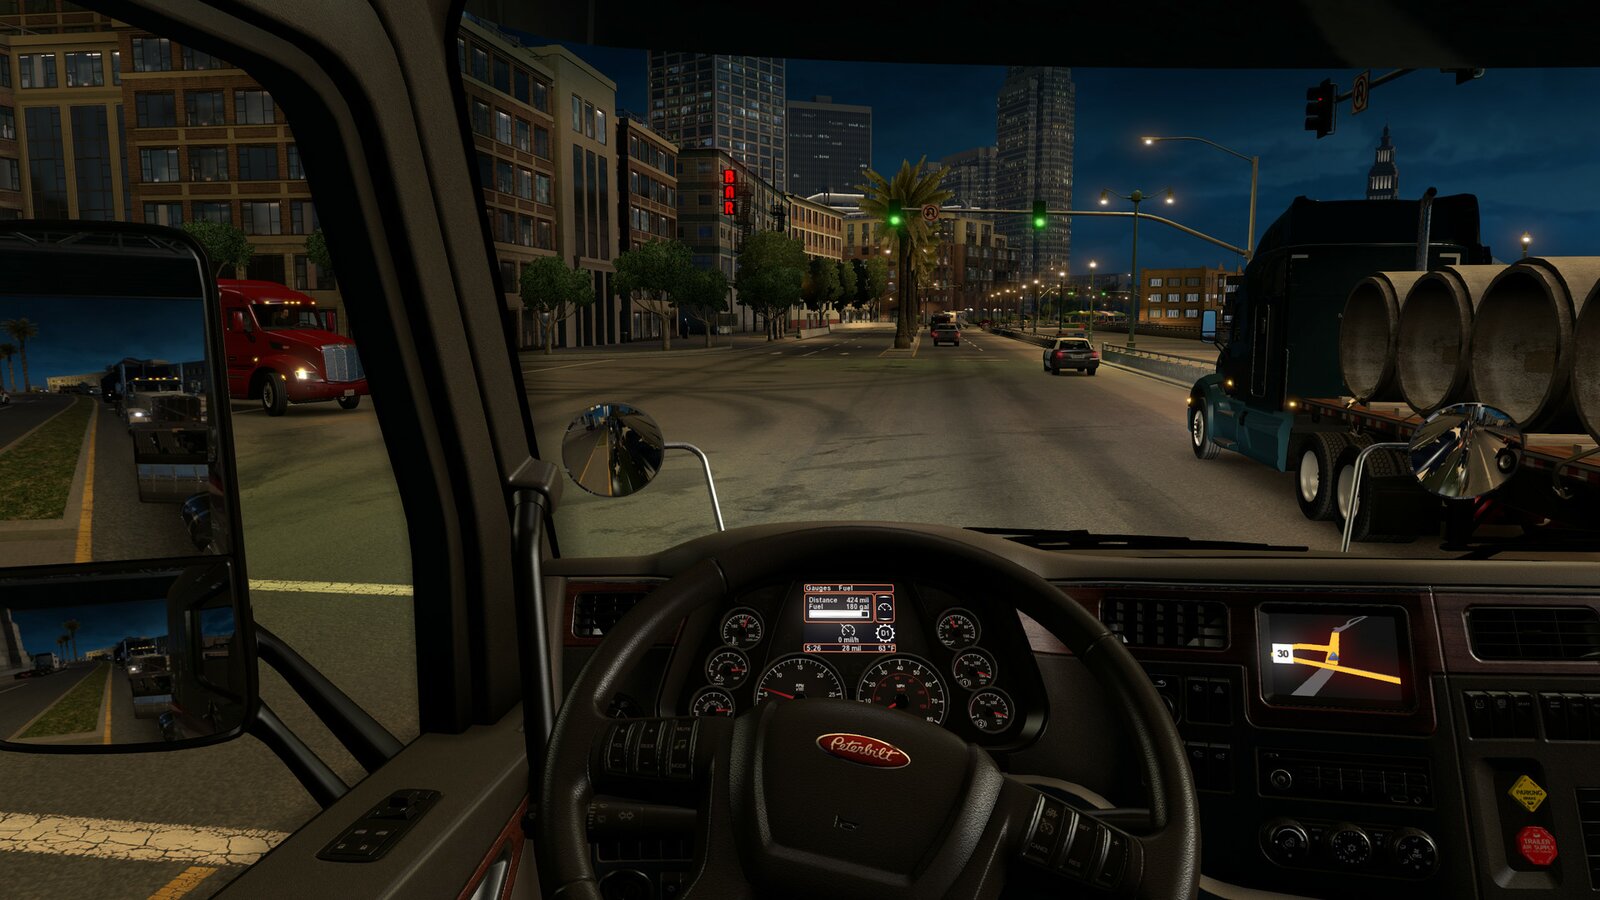 American Truck Simulator - Gold Edition